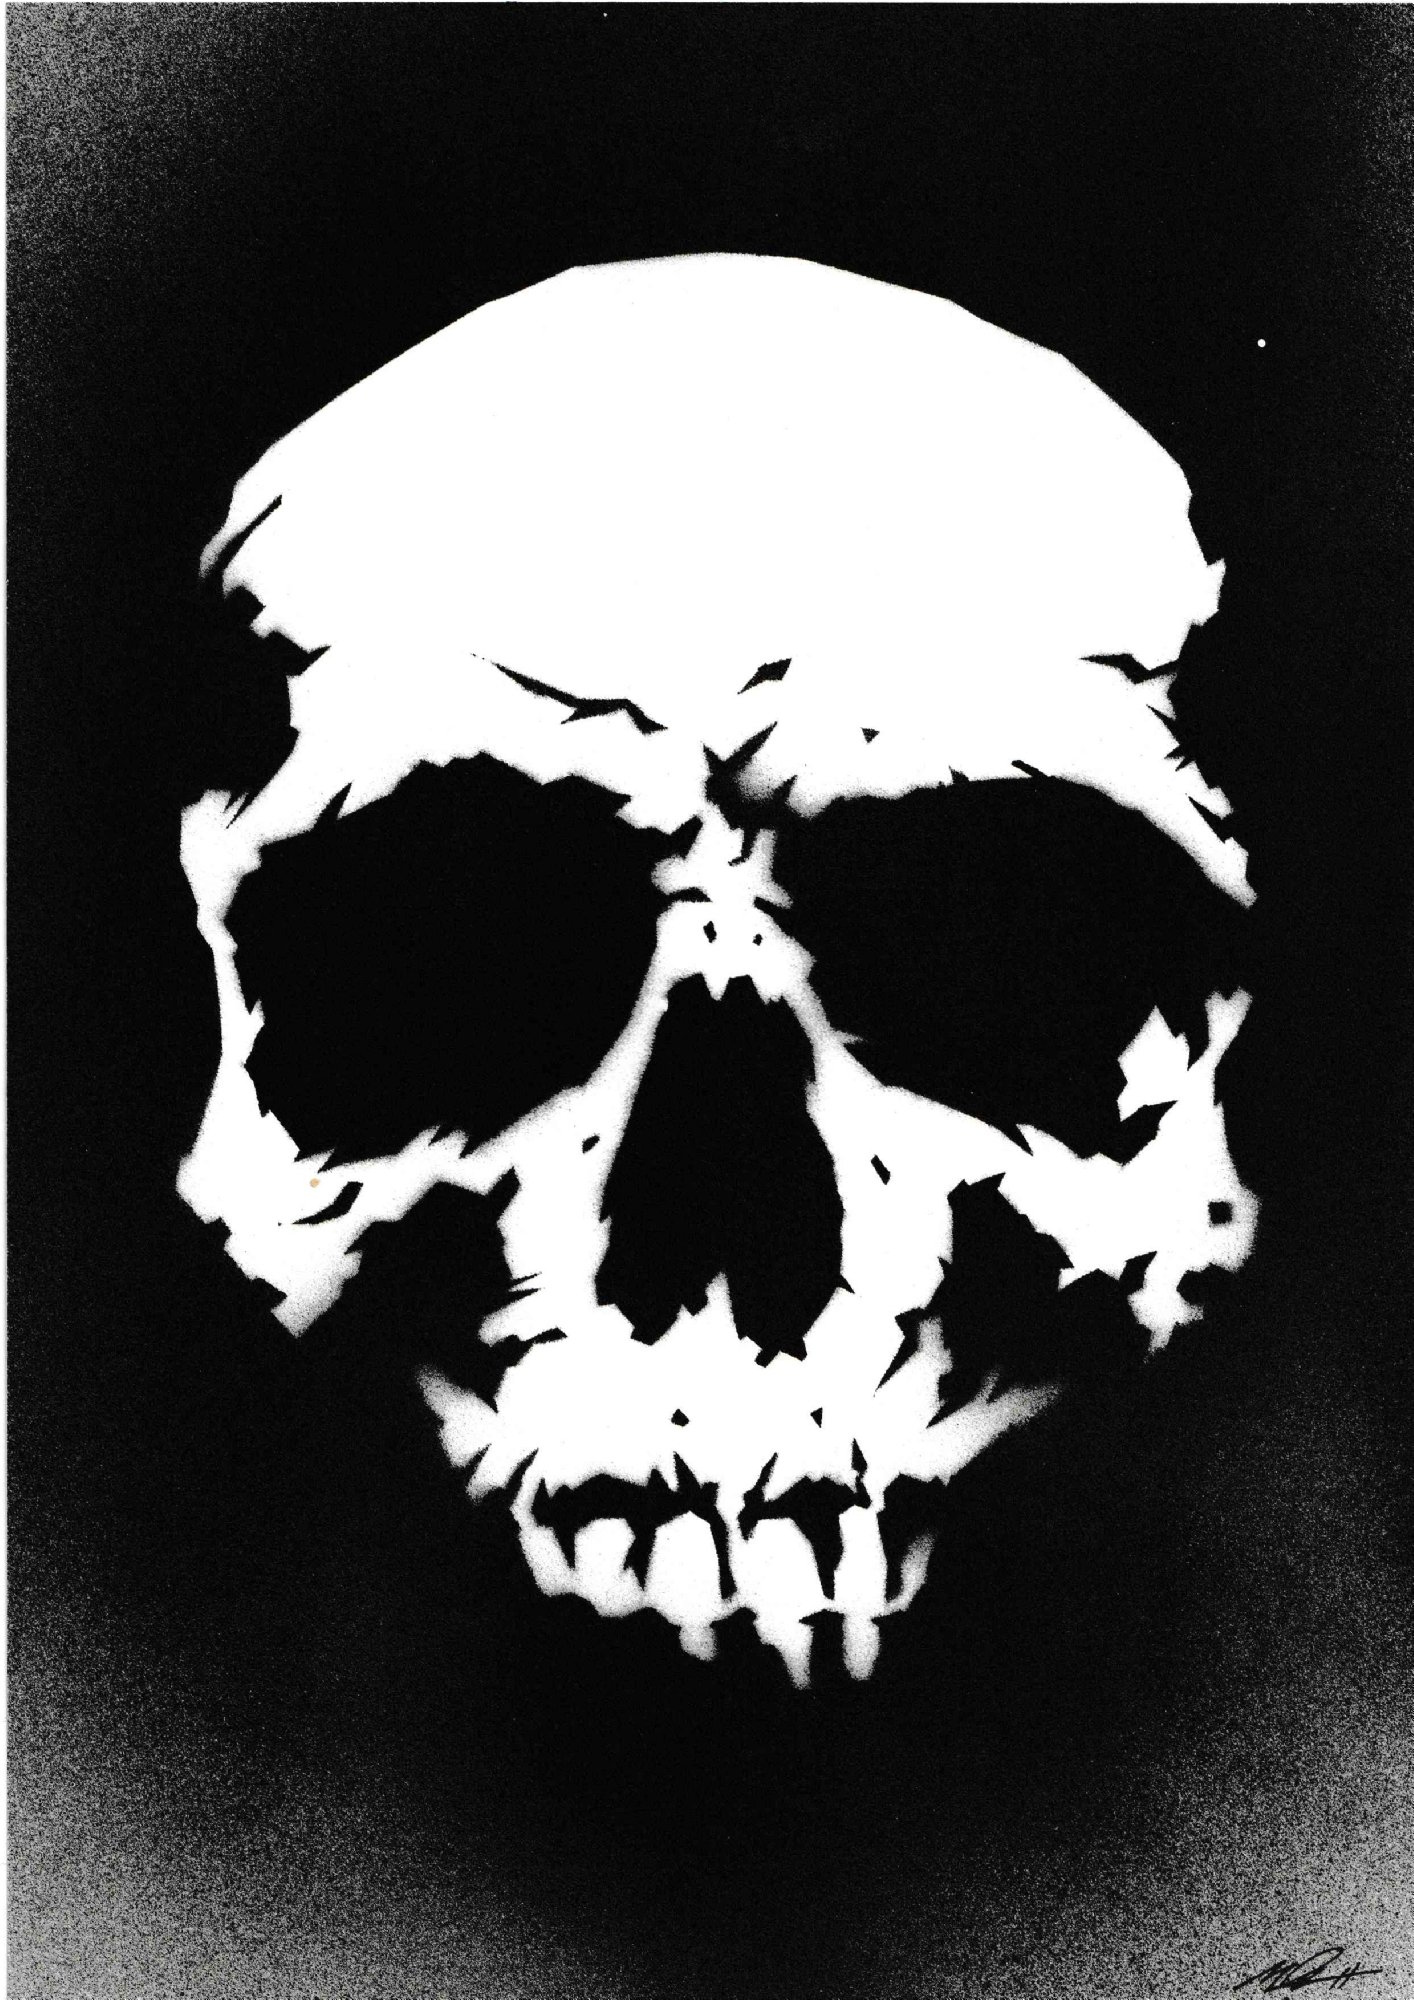 Skull Templates For Airbrushing